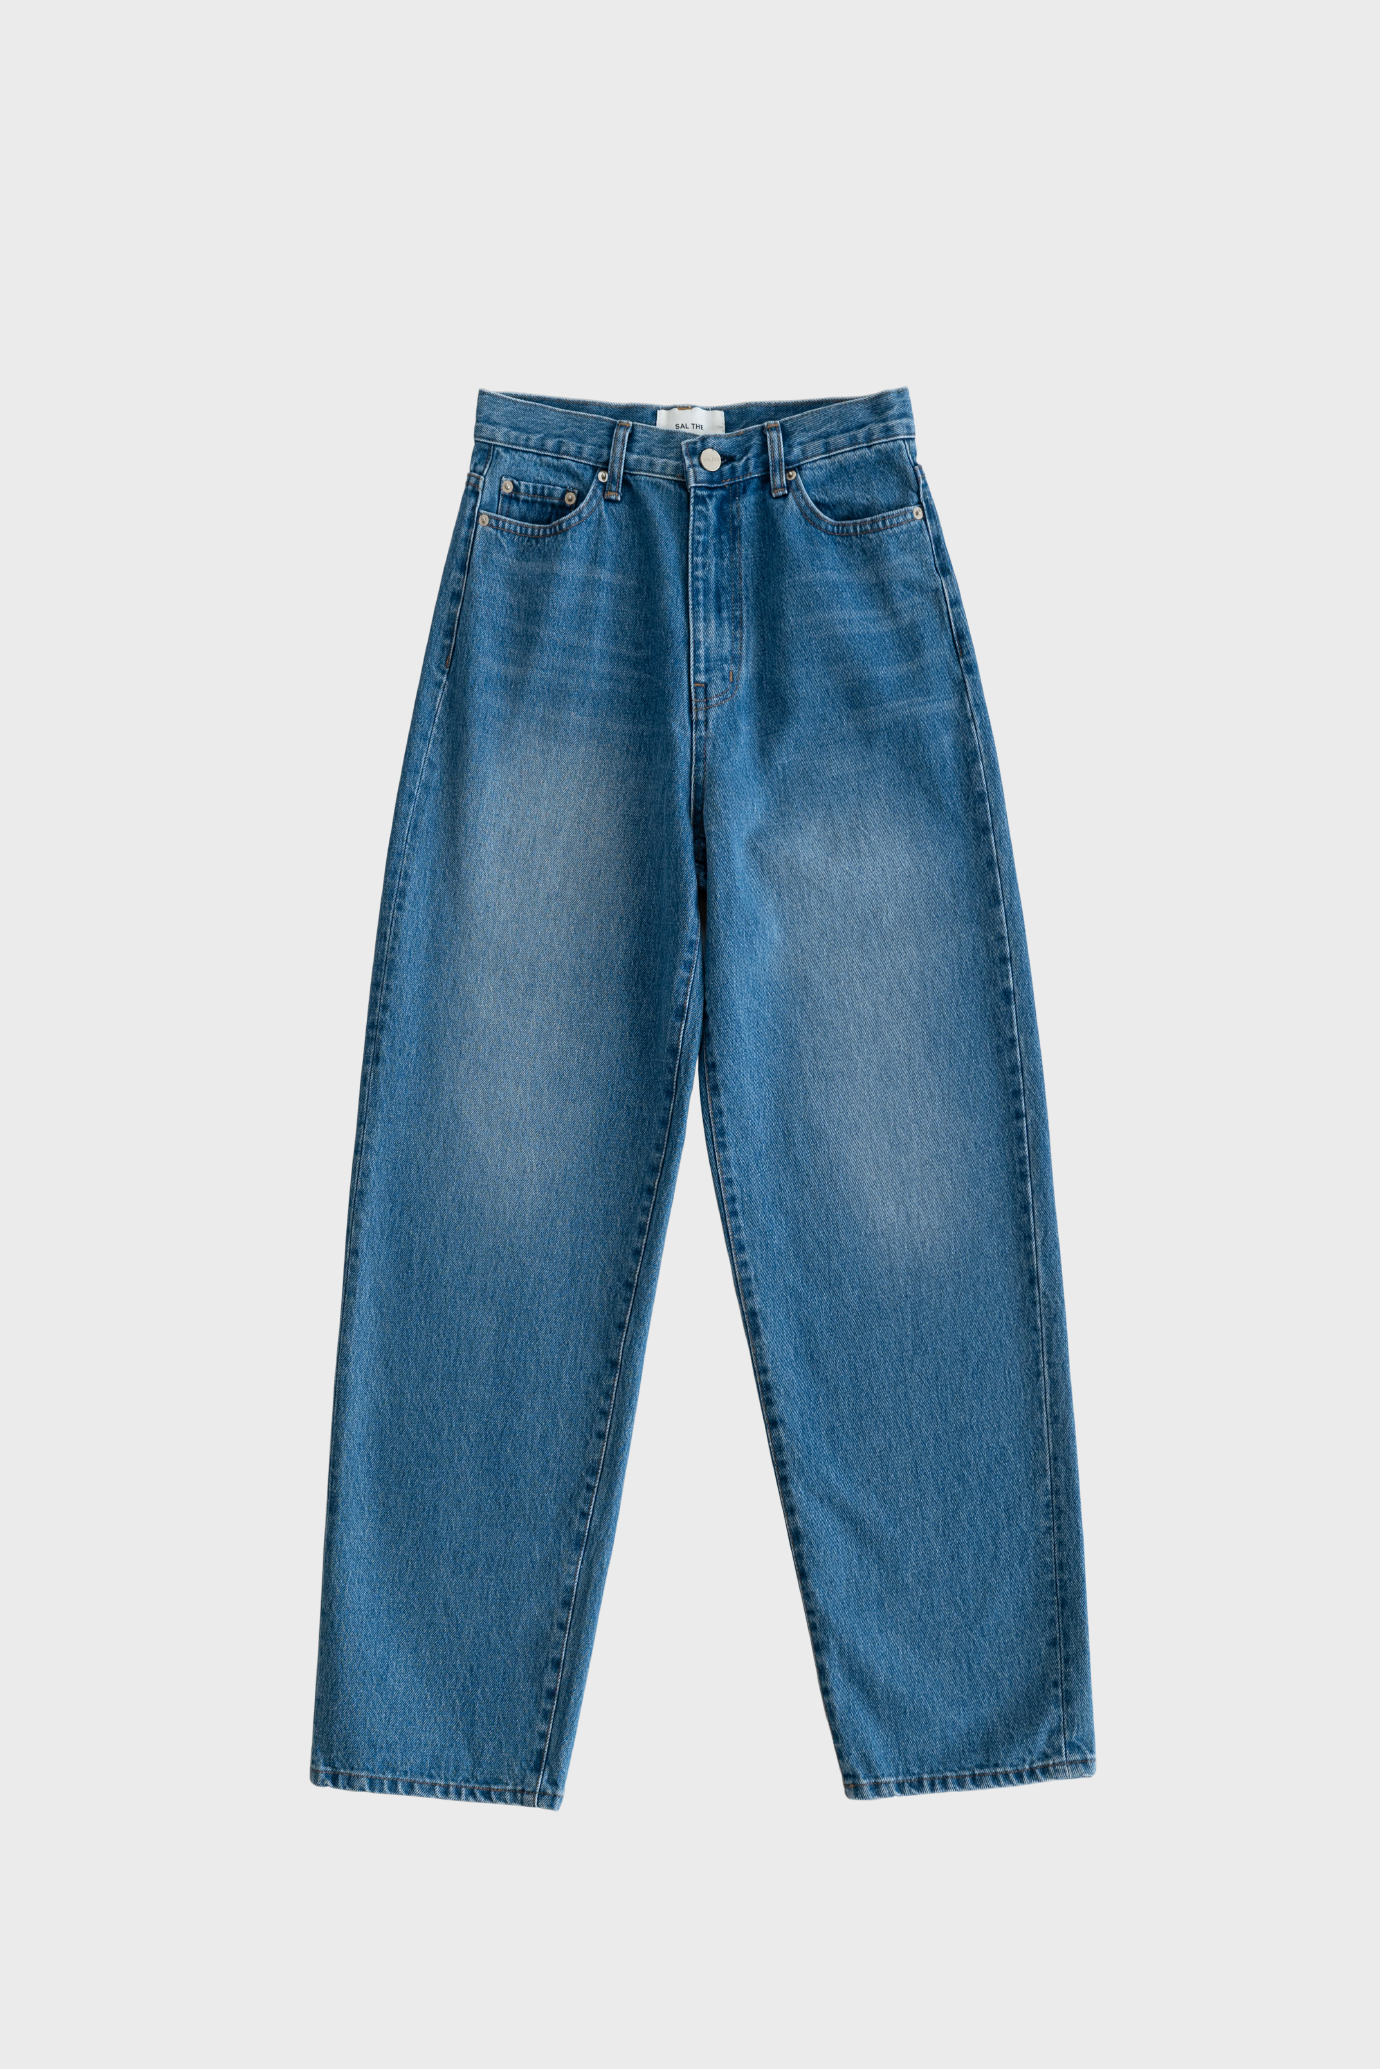 4764_SAL_Original Cone Jeans